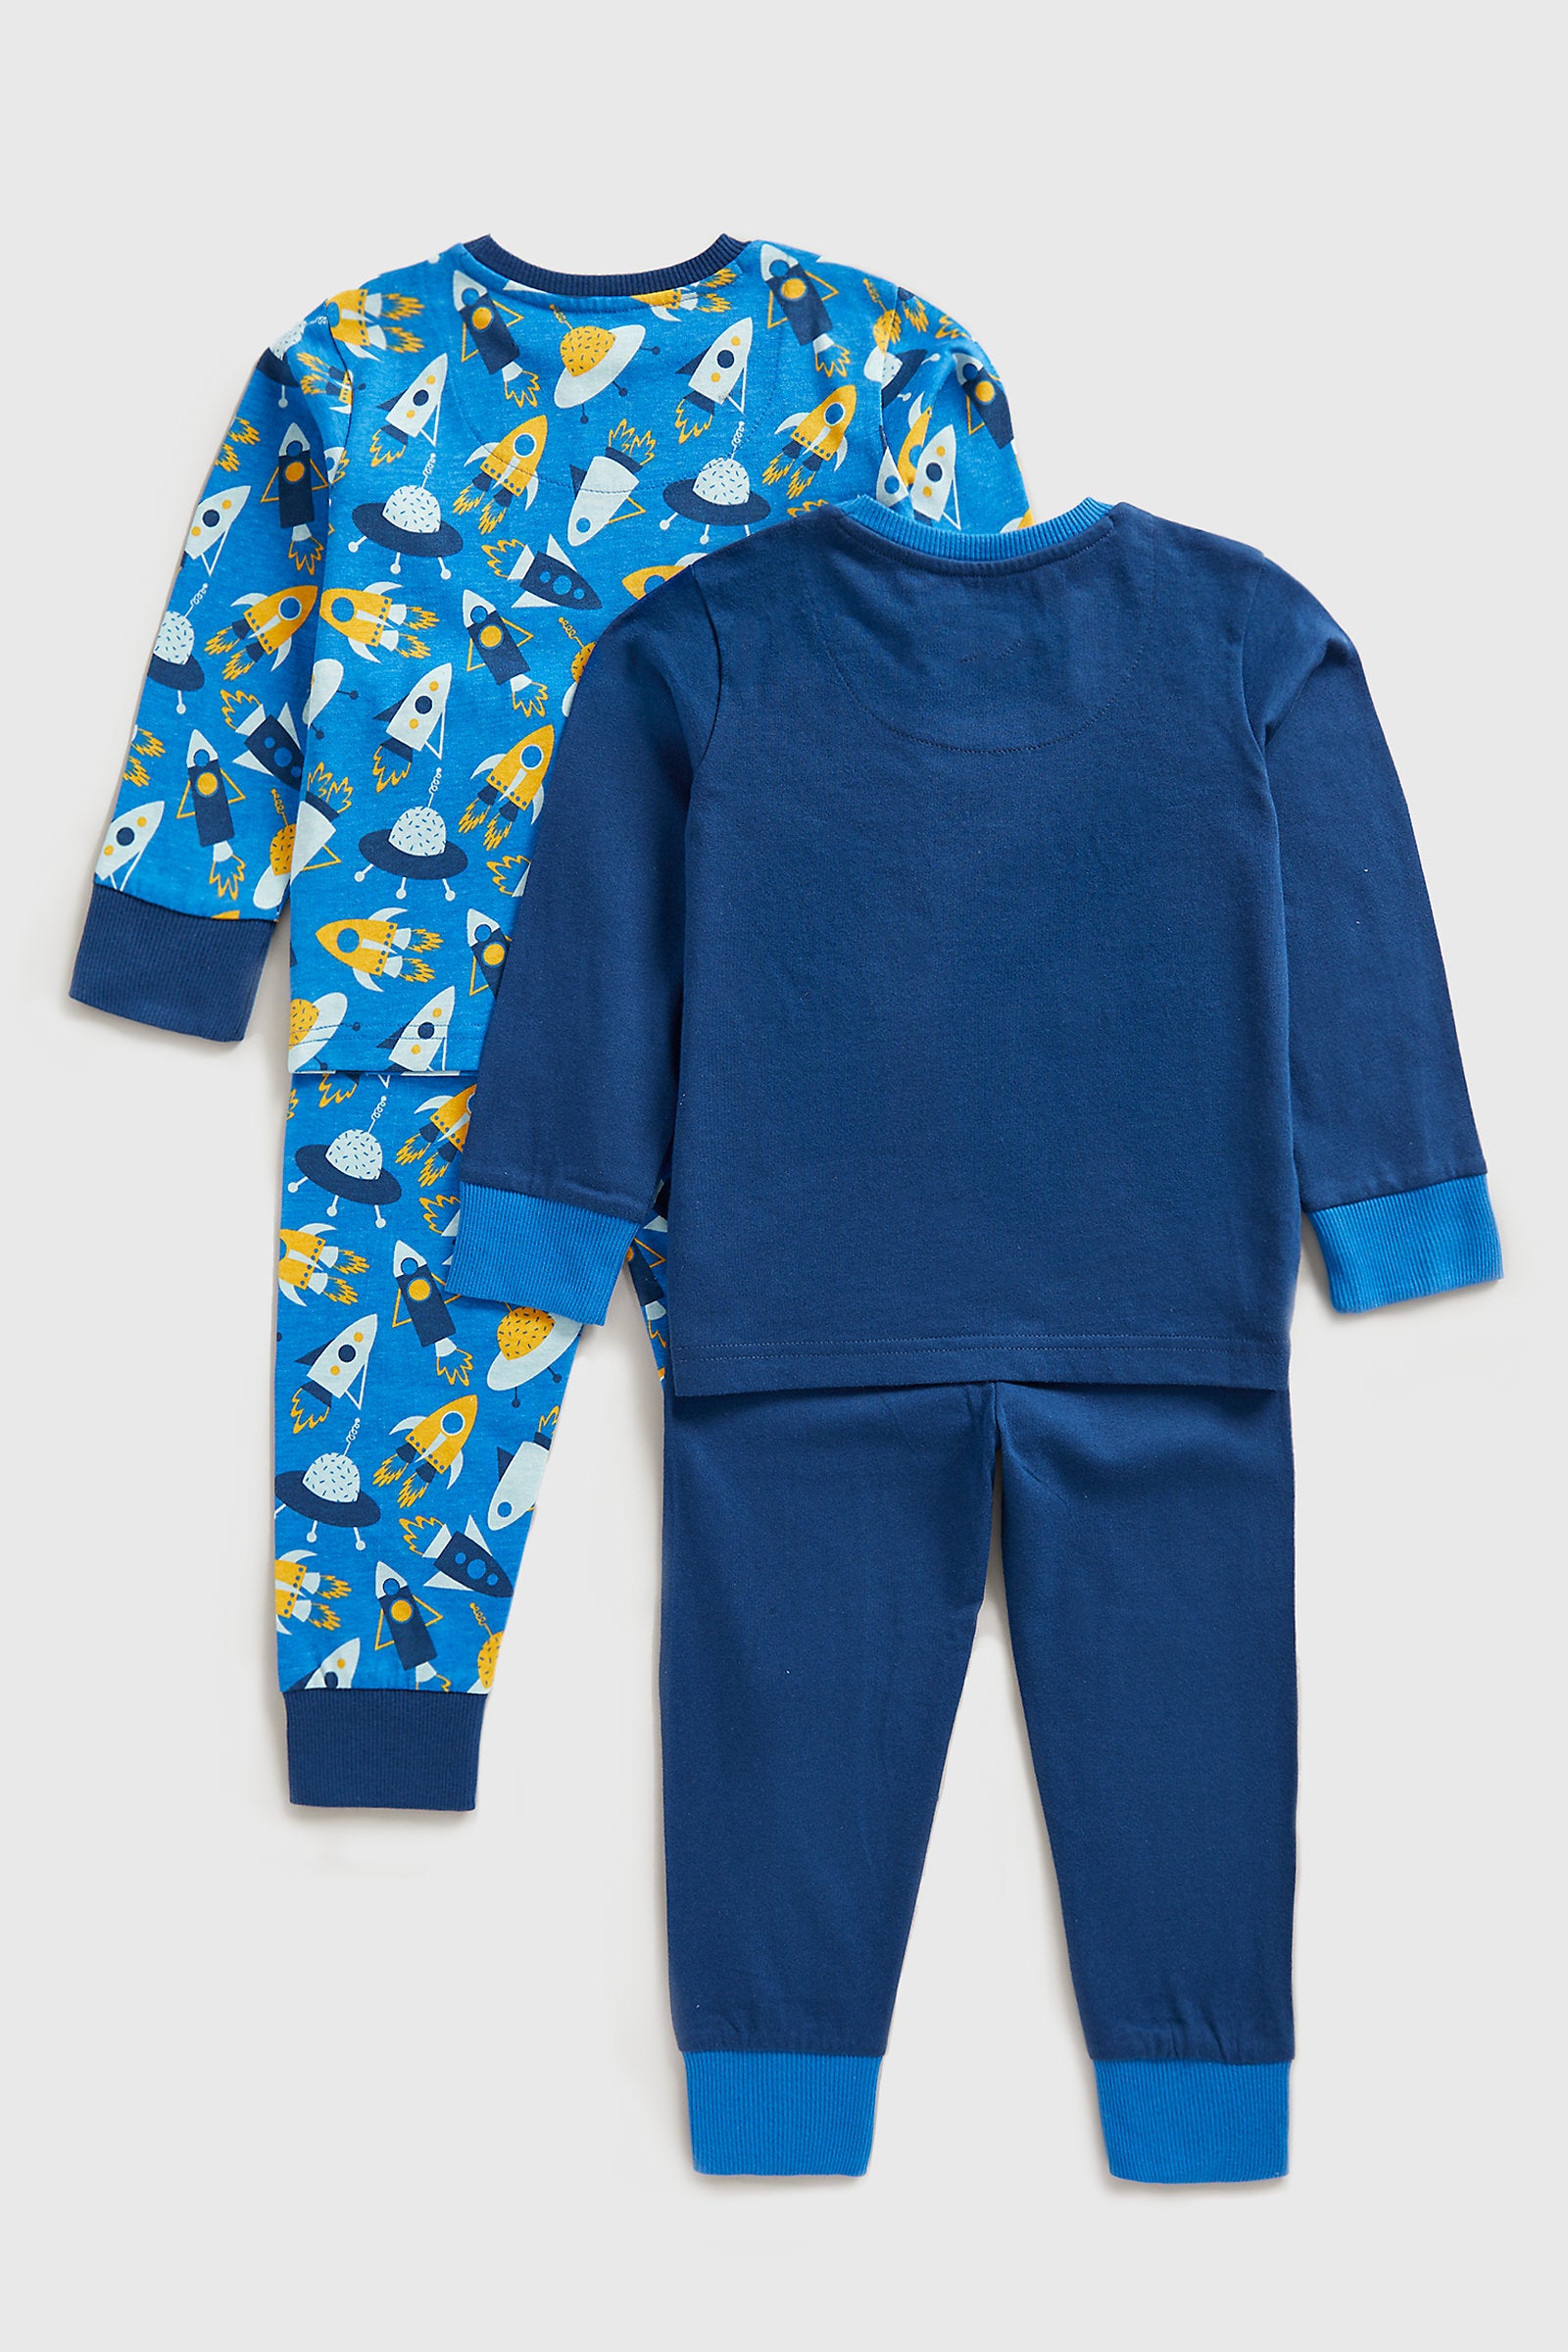 Mothercare Space Pyjamas - 2 Pack